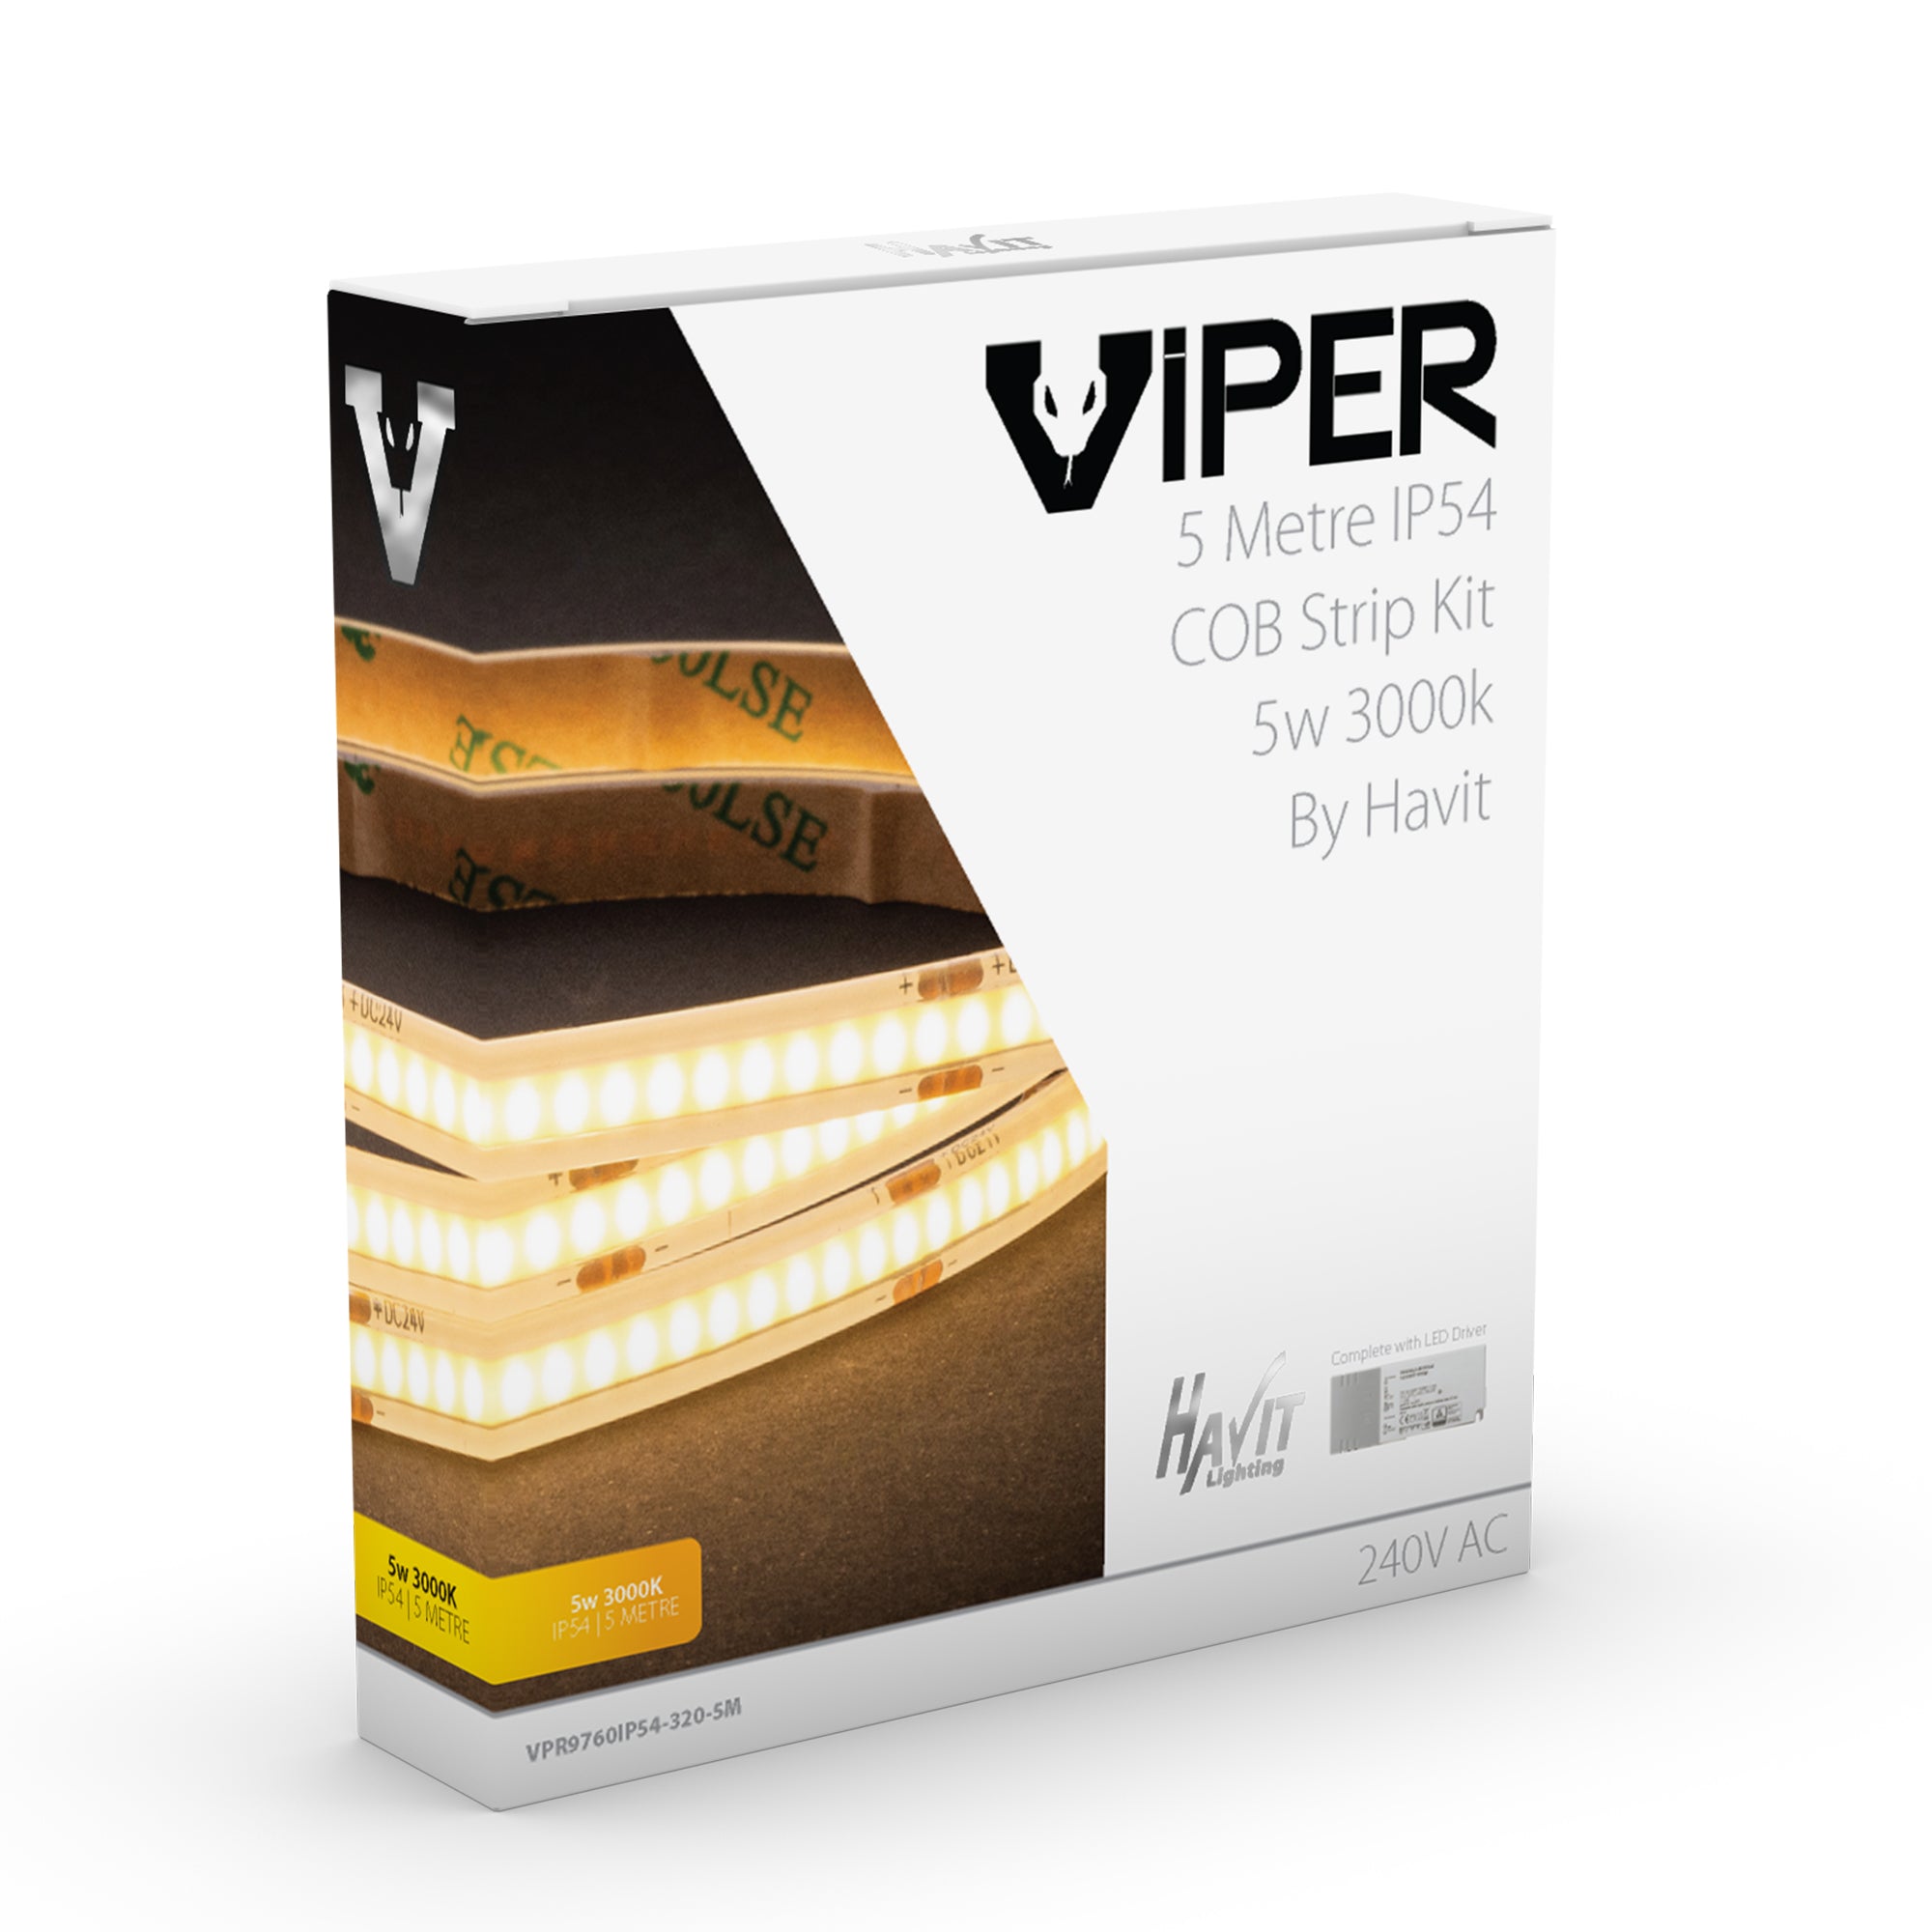 VPR9760IP54-320-5M - Viper COB 5w Per Metre 5m LED Strip kit 3000k